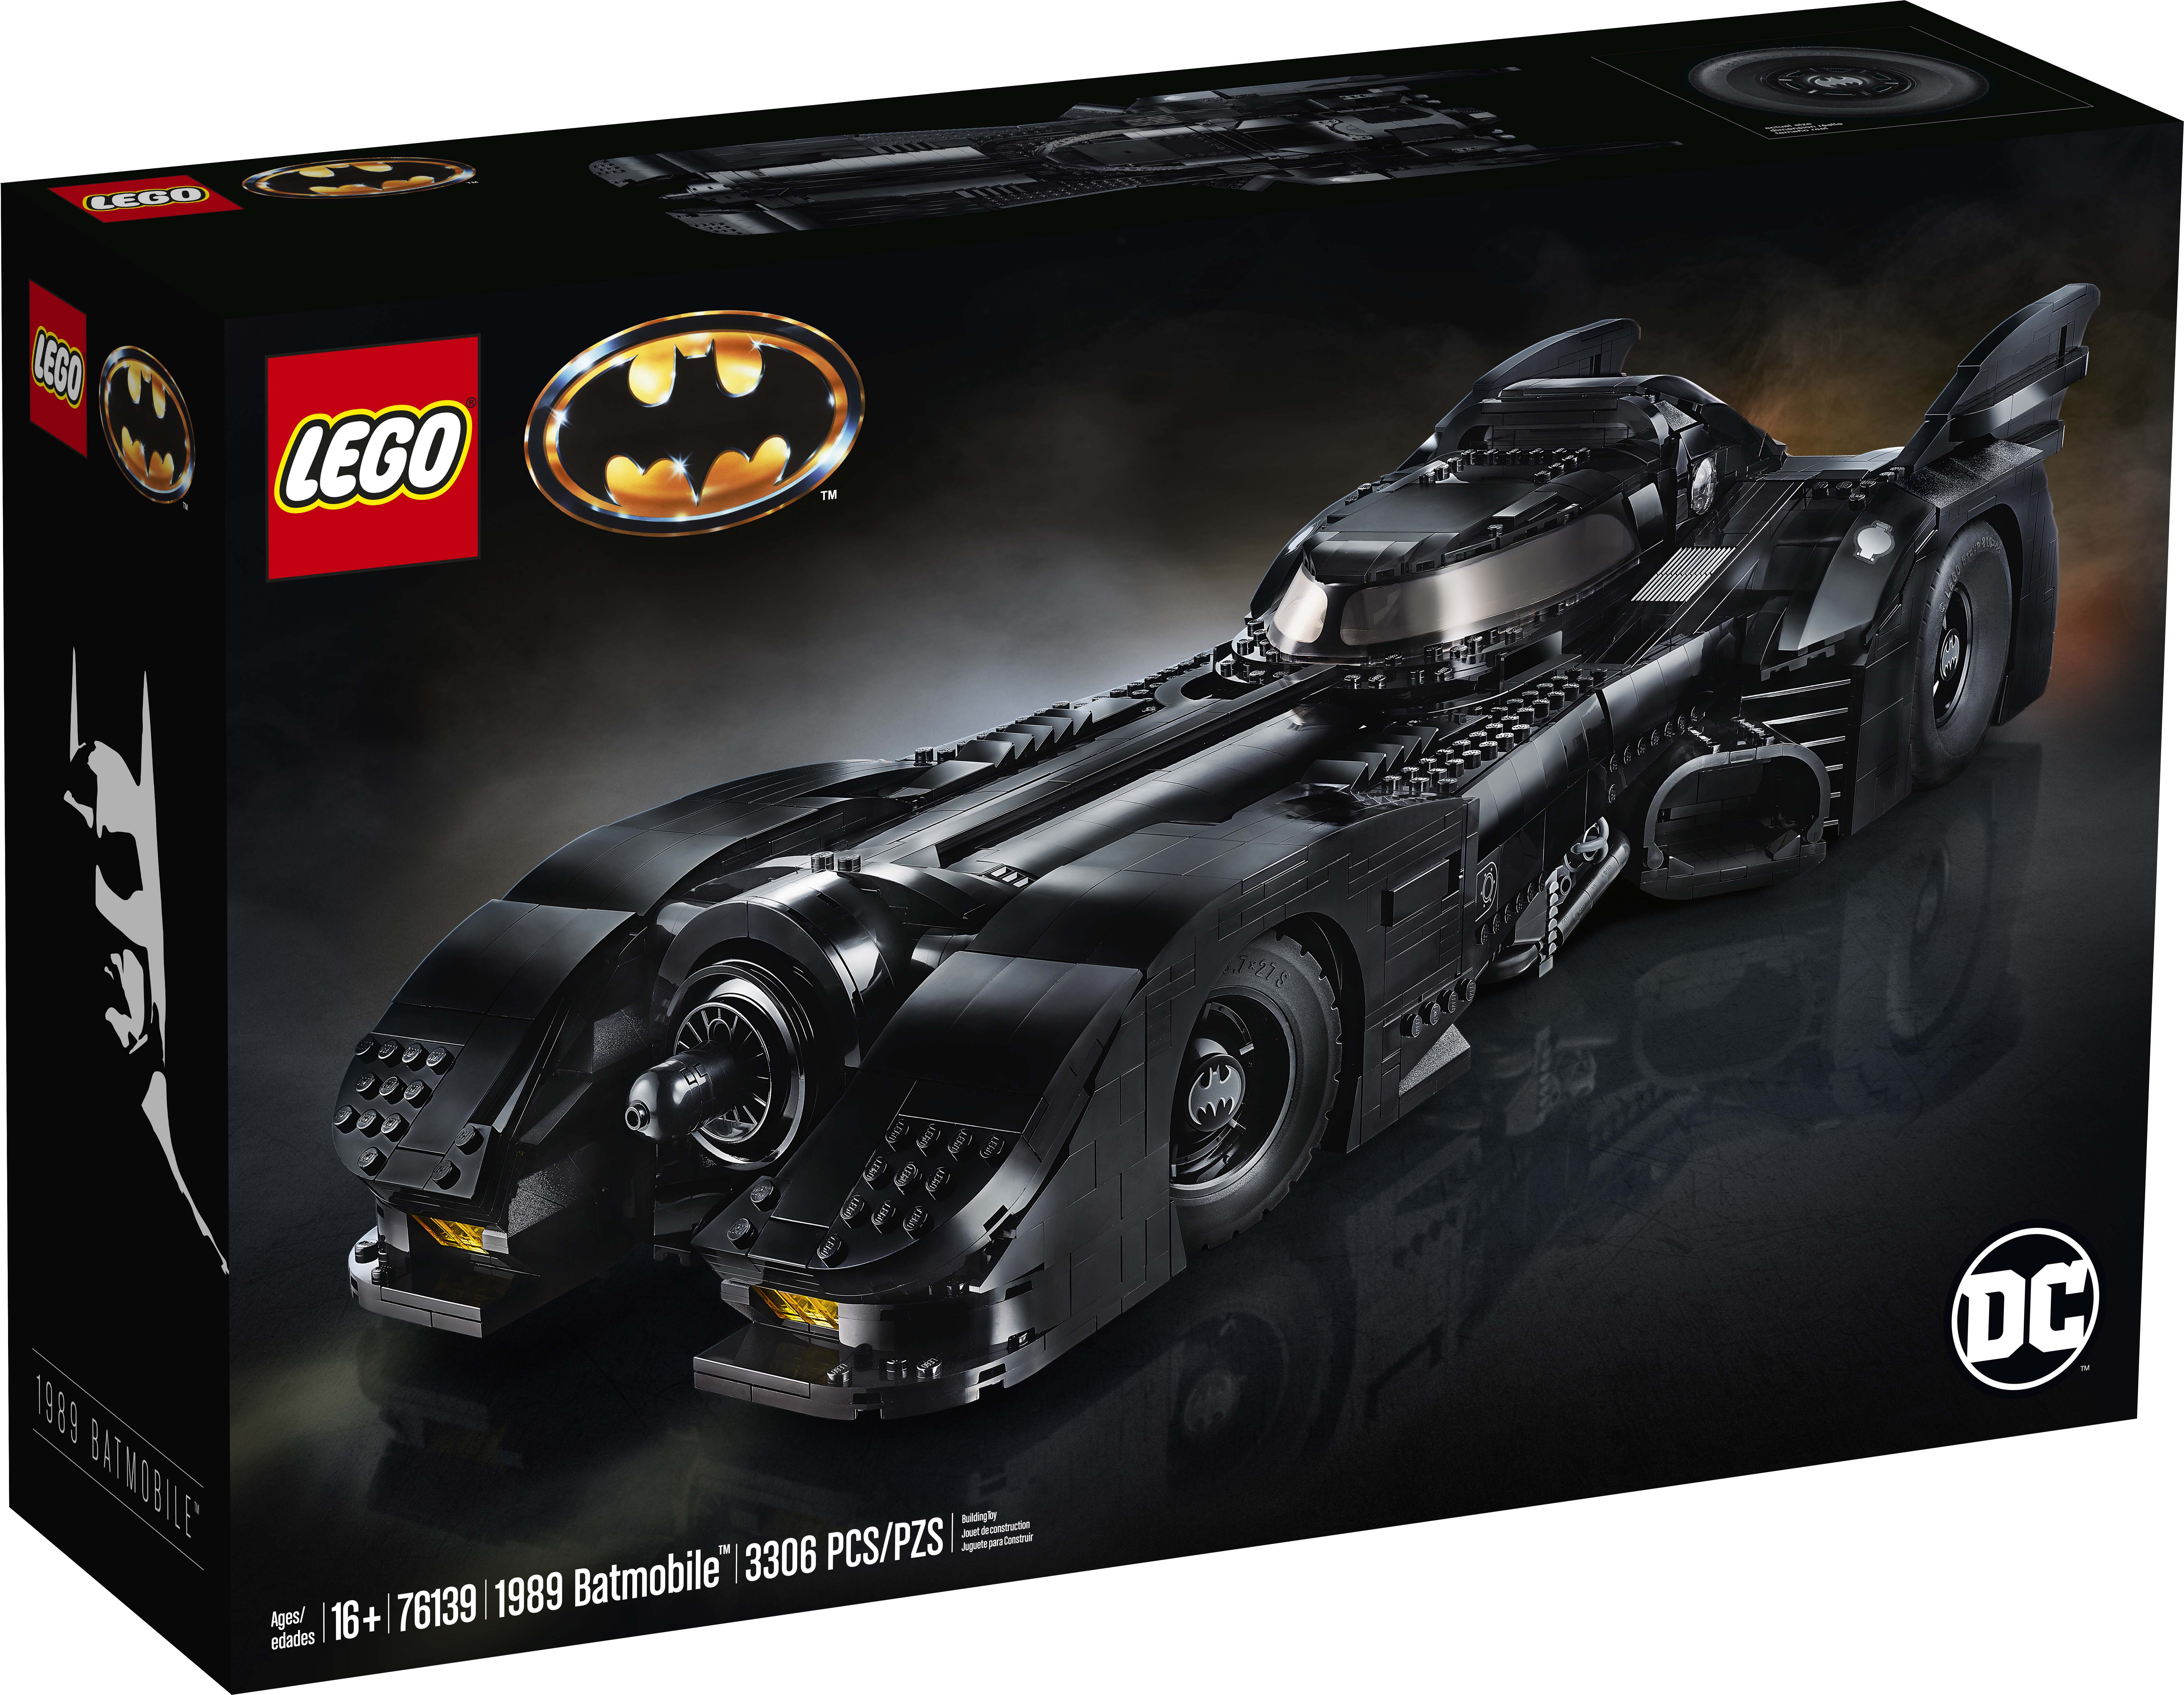 LEGO Batman 1989 Batmobile (76139) Officially Announced - The Brick Fan